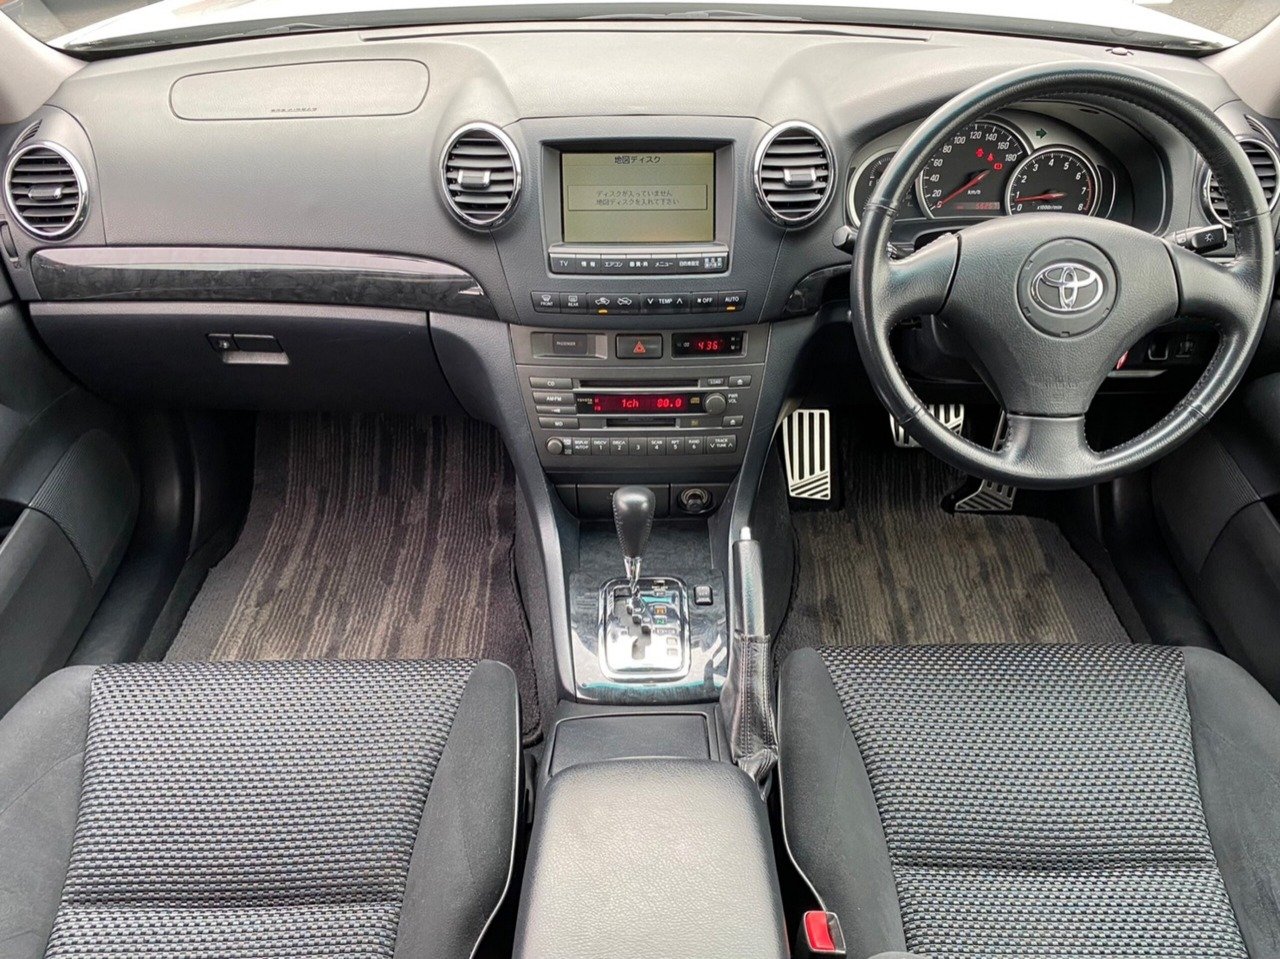 Toyota Verossa interior - Cockpit